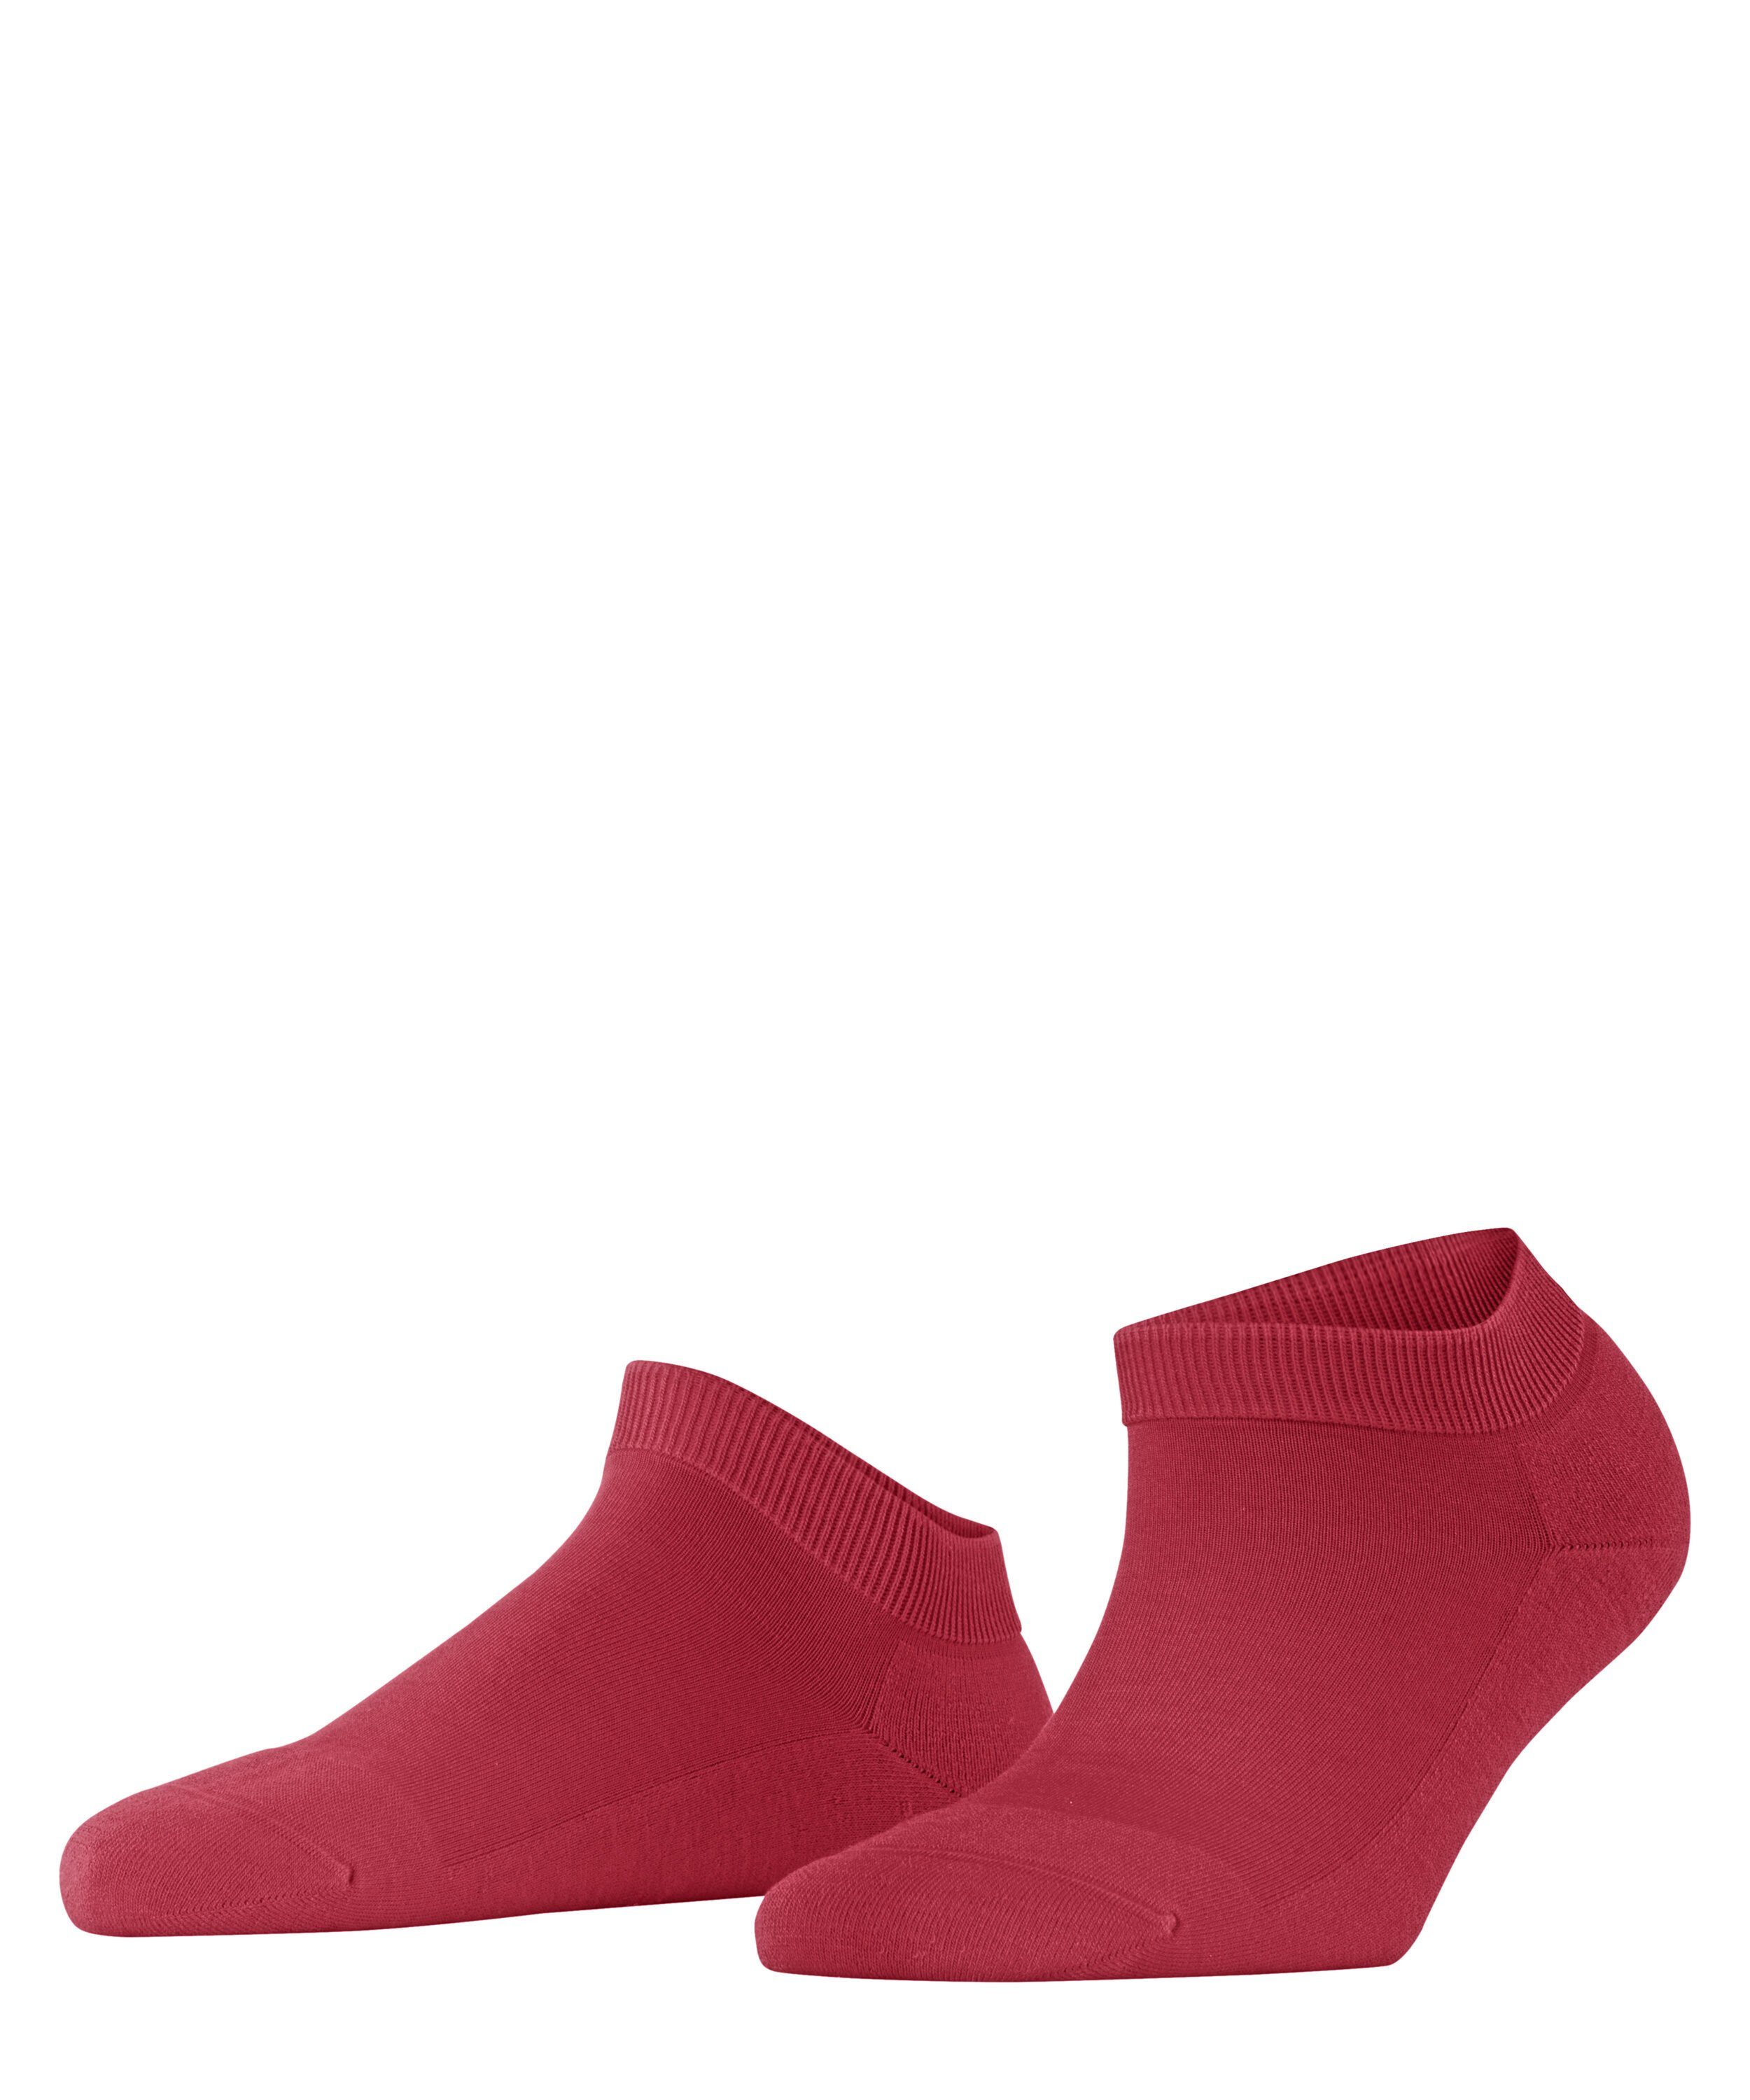 Mischung ClimaWool (1-Paar) aus (8228) klimaregulierender scarlet Wolle-Lyocell FALKE Sneakersocken